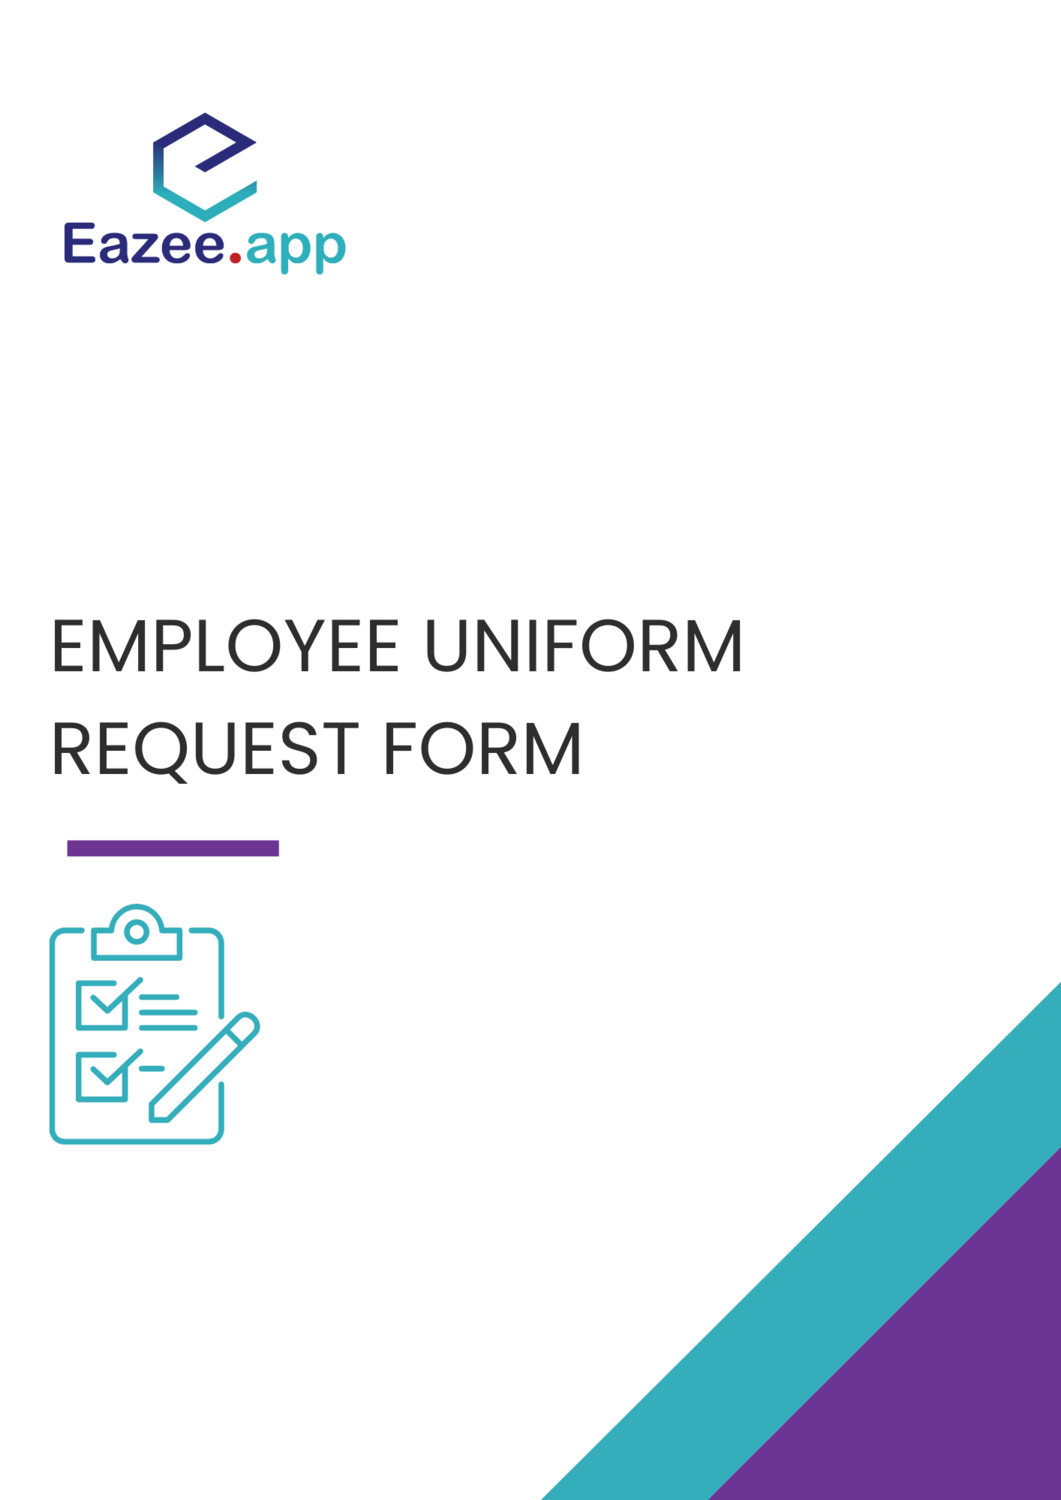 Employee uniform request form